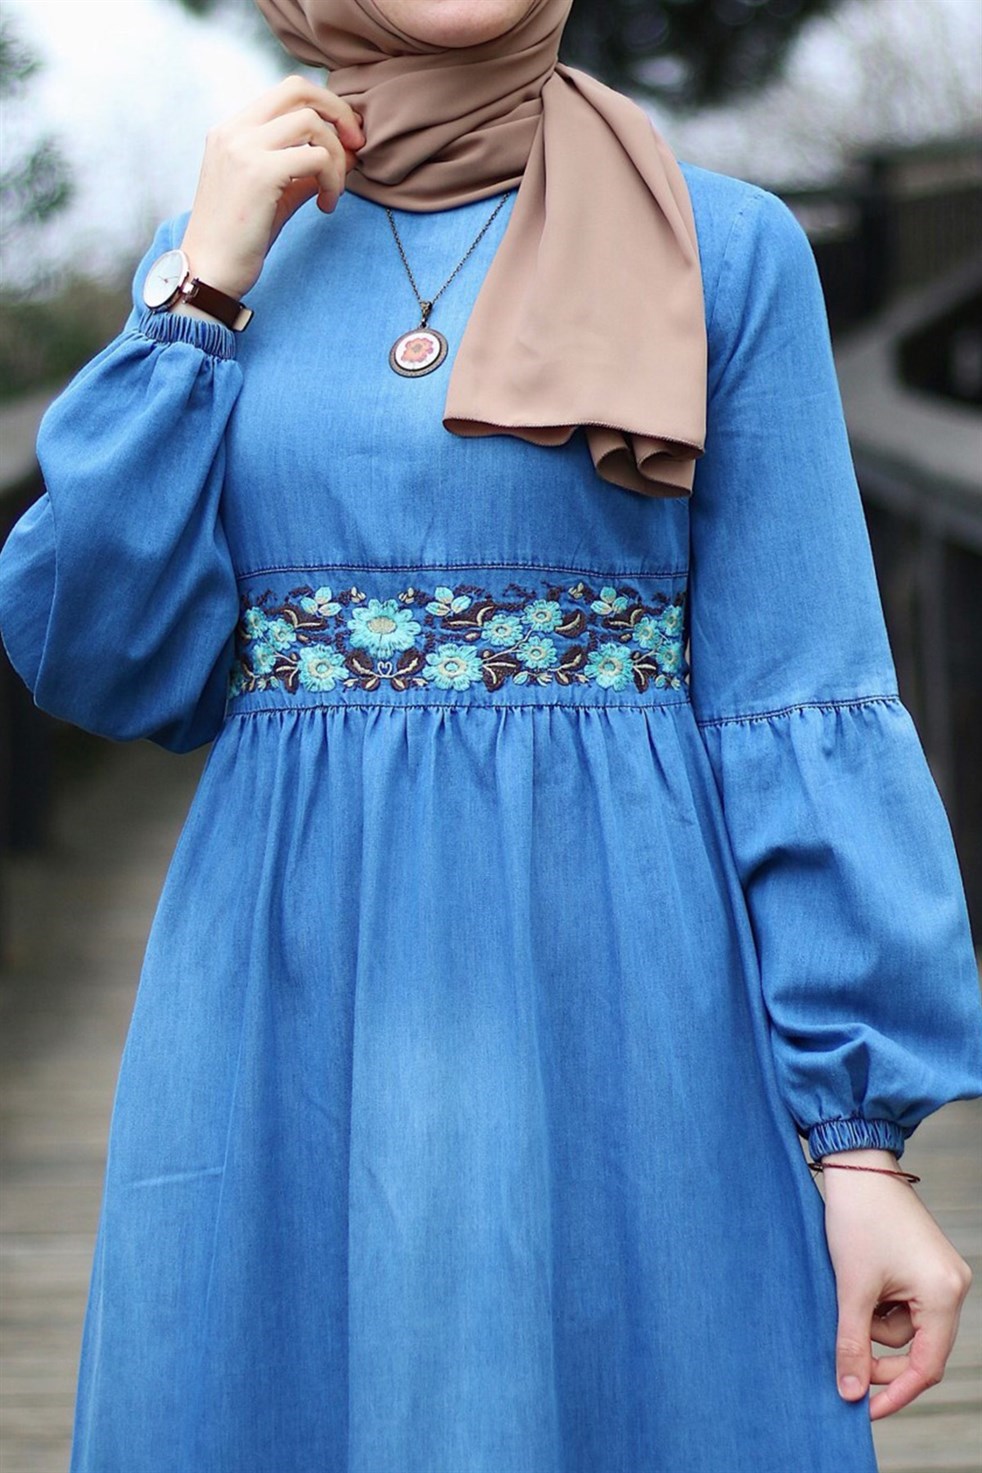 Daisy Embroidery Patterned Denim Dress - Blue